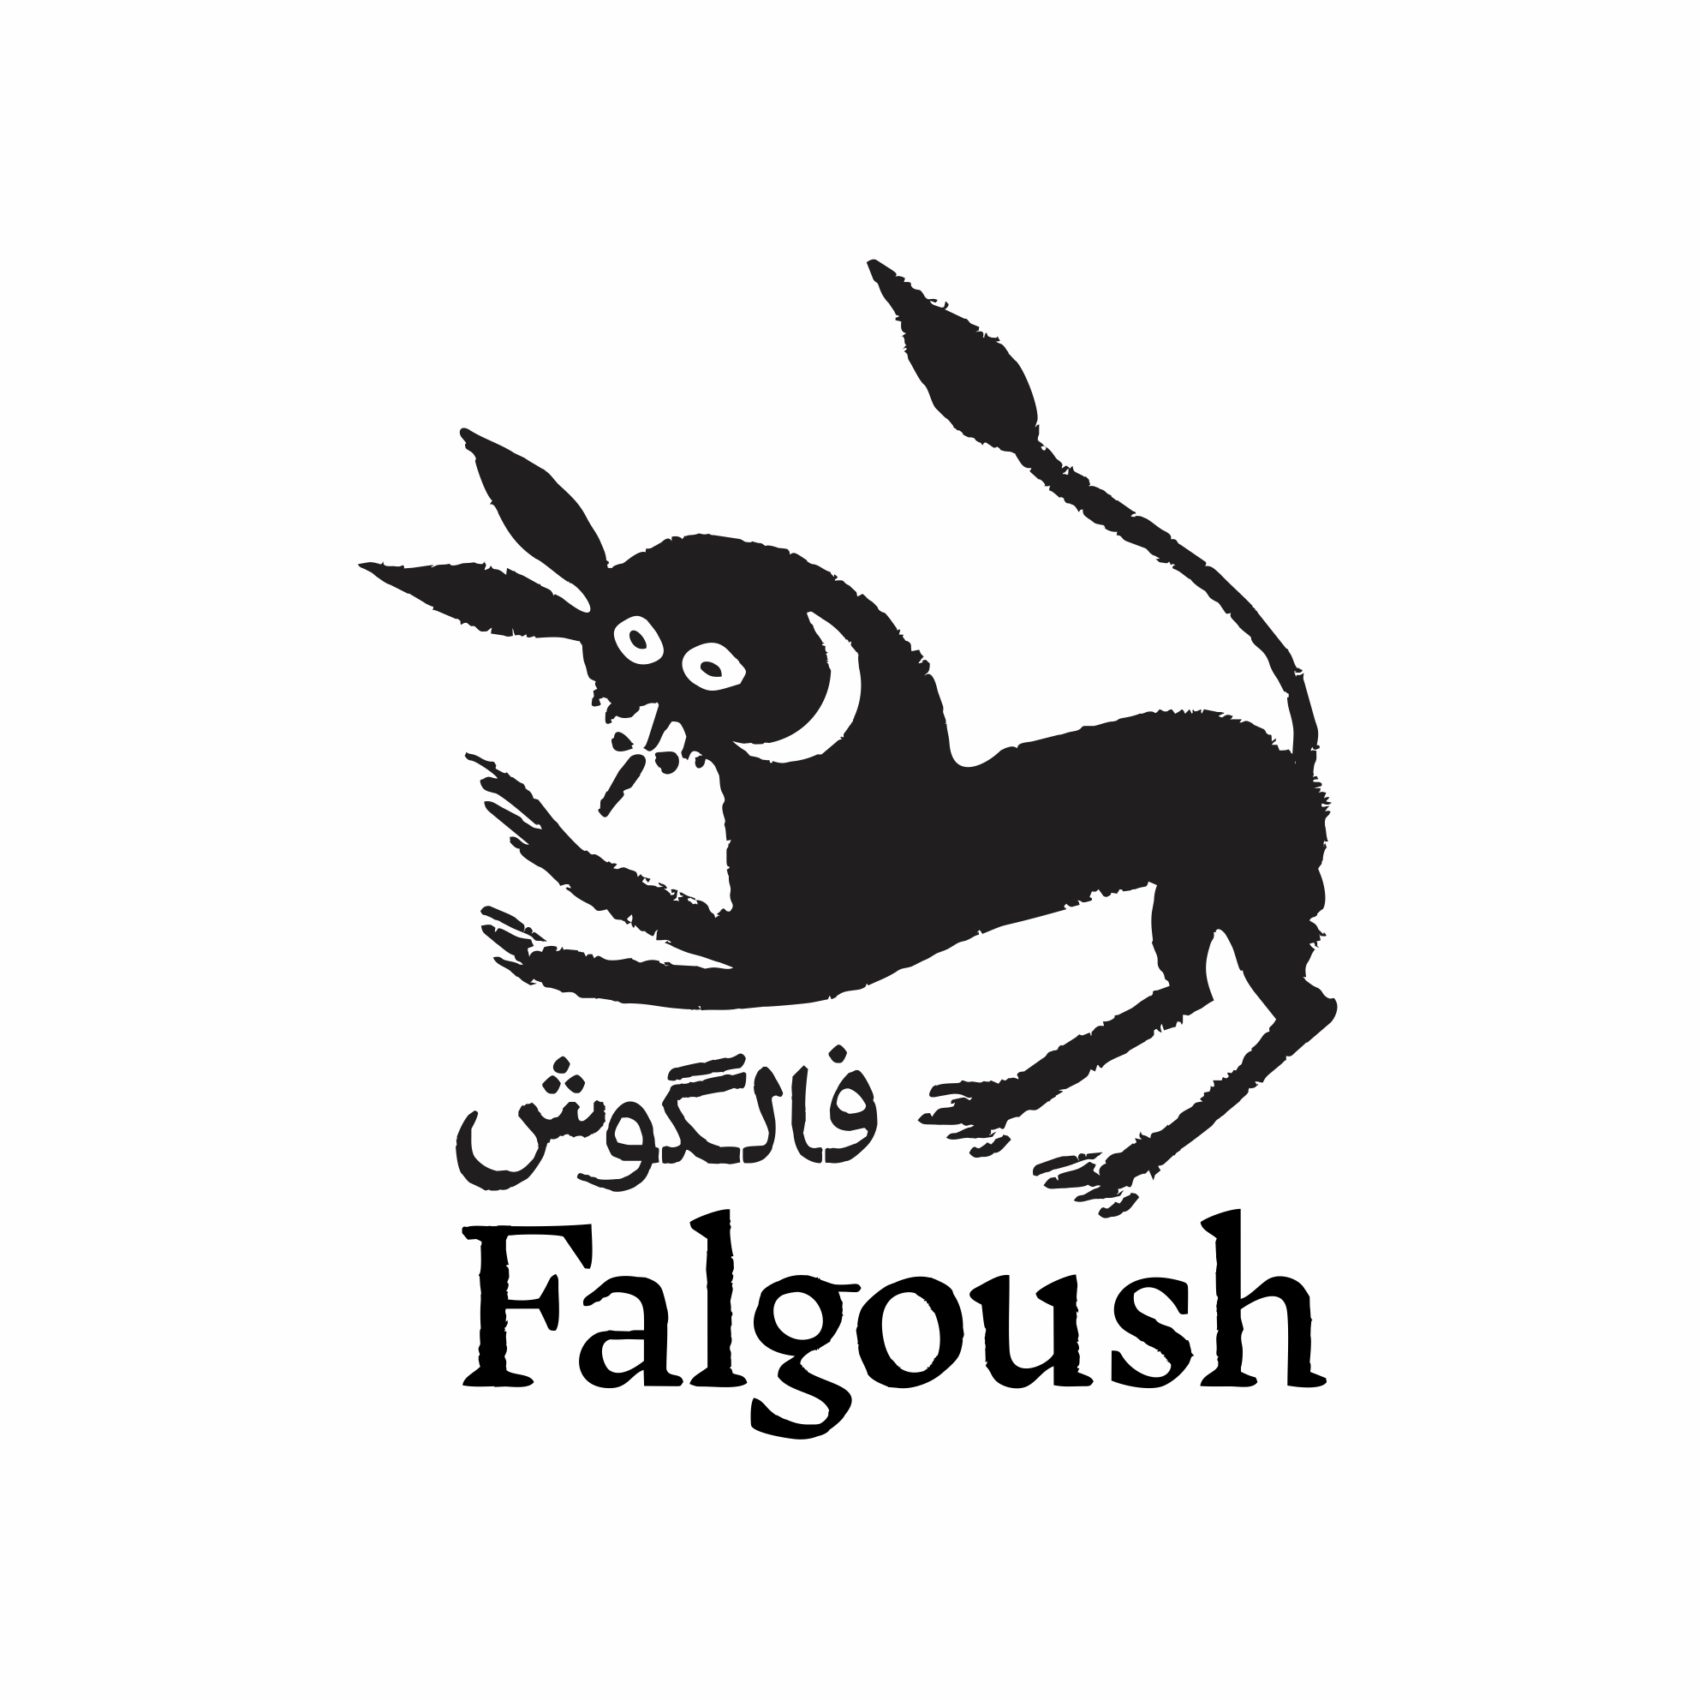 Falgoush - Paris Ass Book Fair